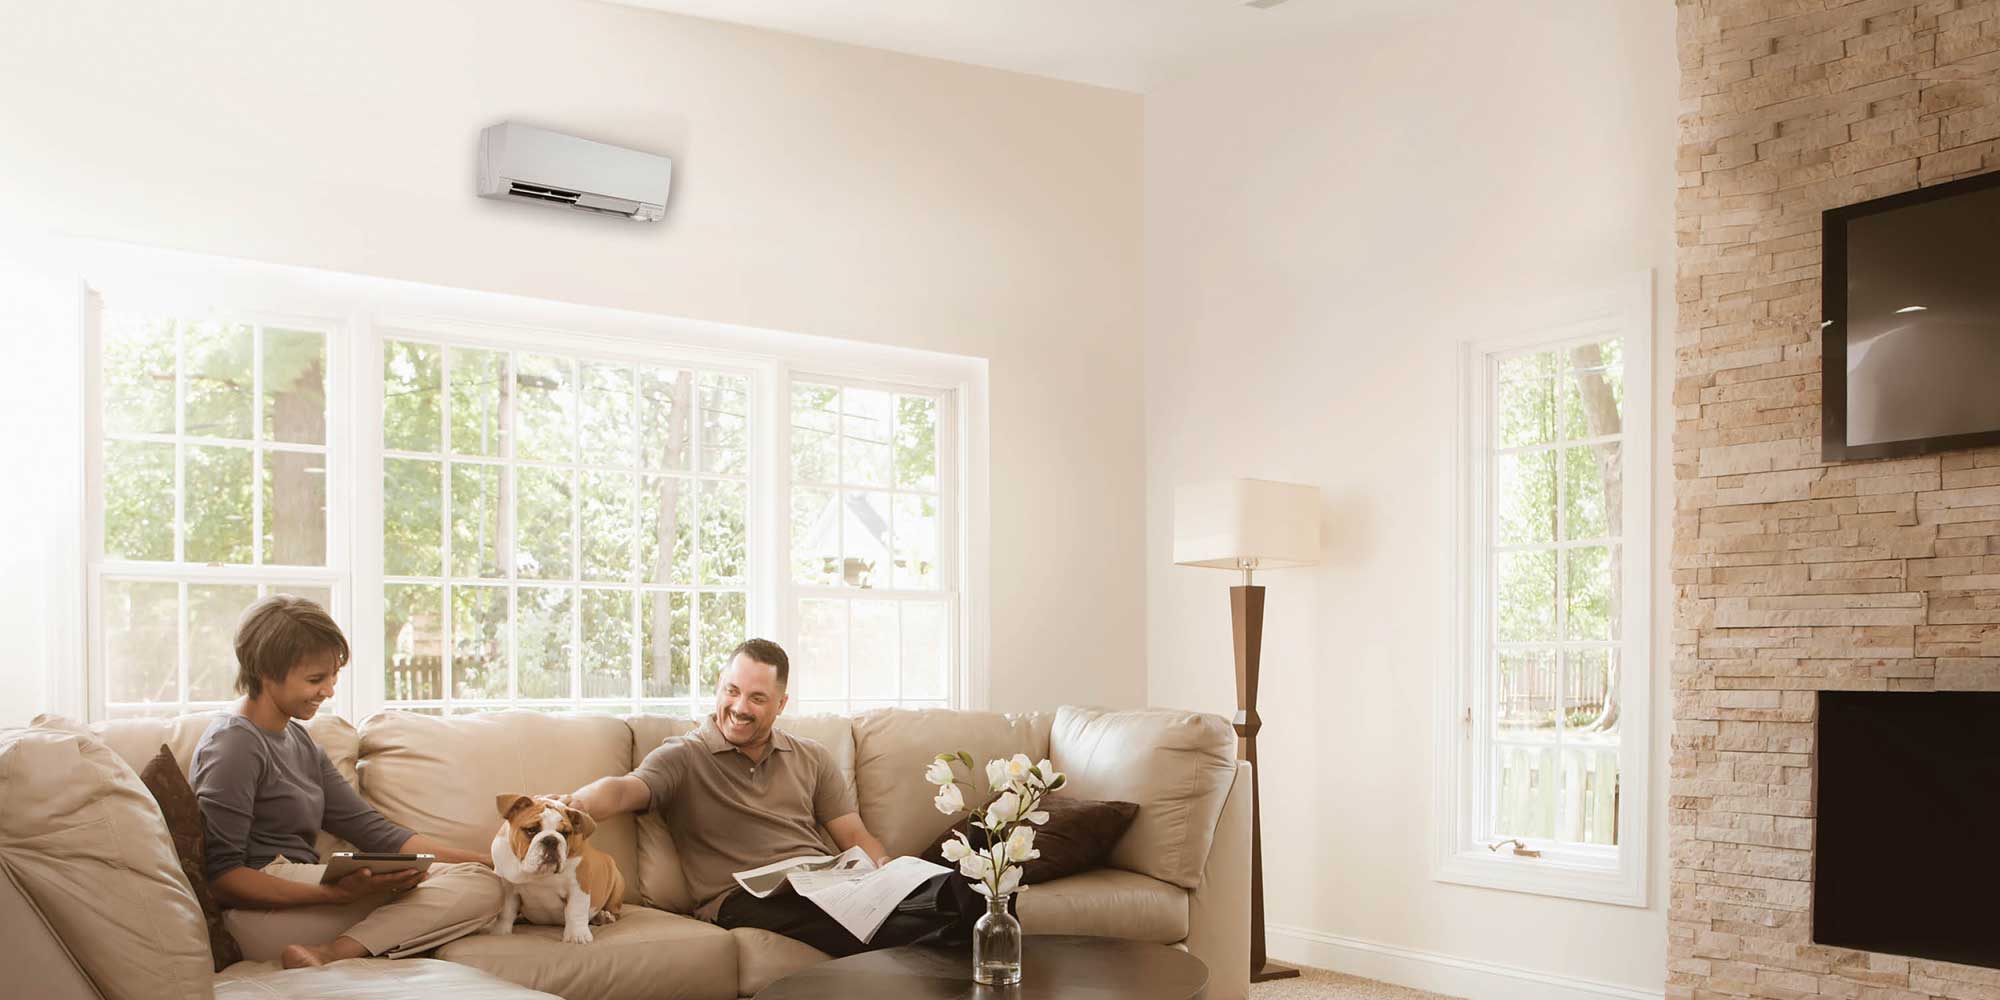 Residental HVAC Solutions